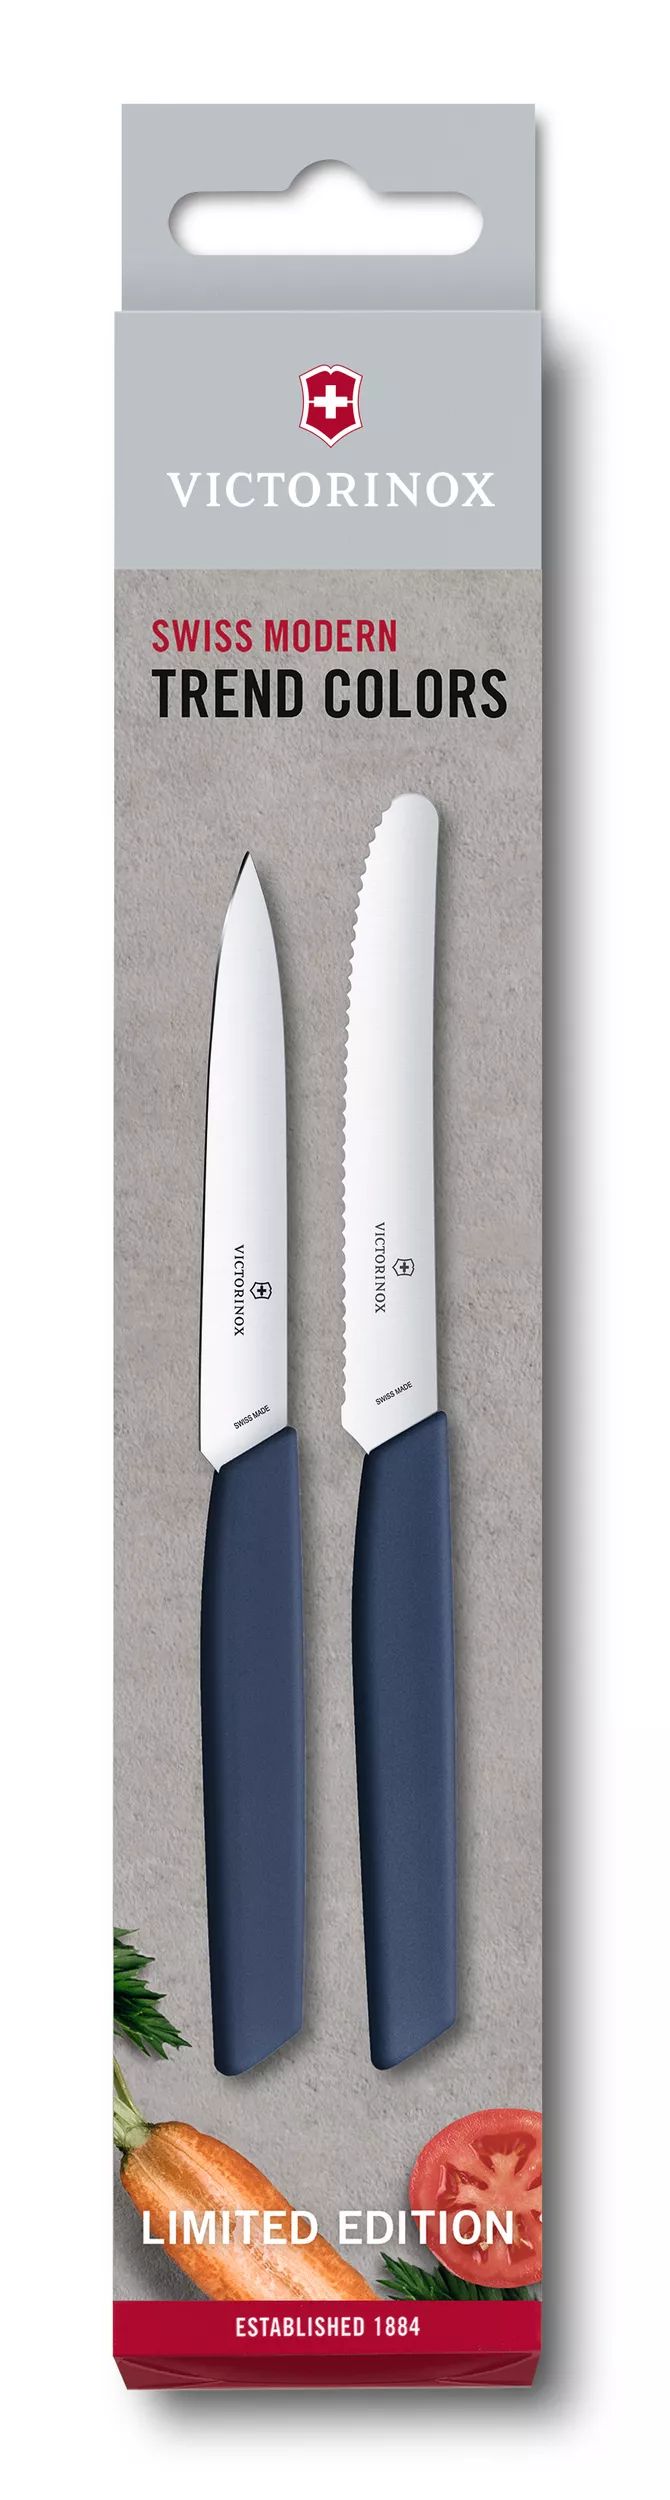 Swiss Modern Paring Knife Set, 2 pieces-6.9096.2L3